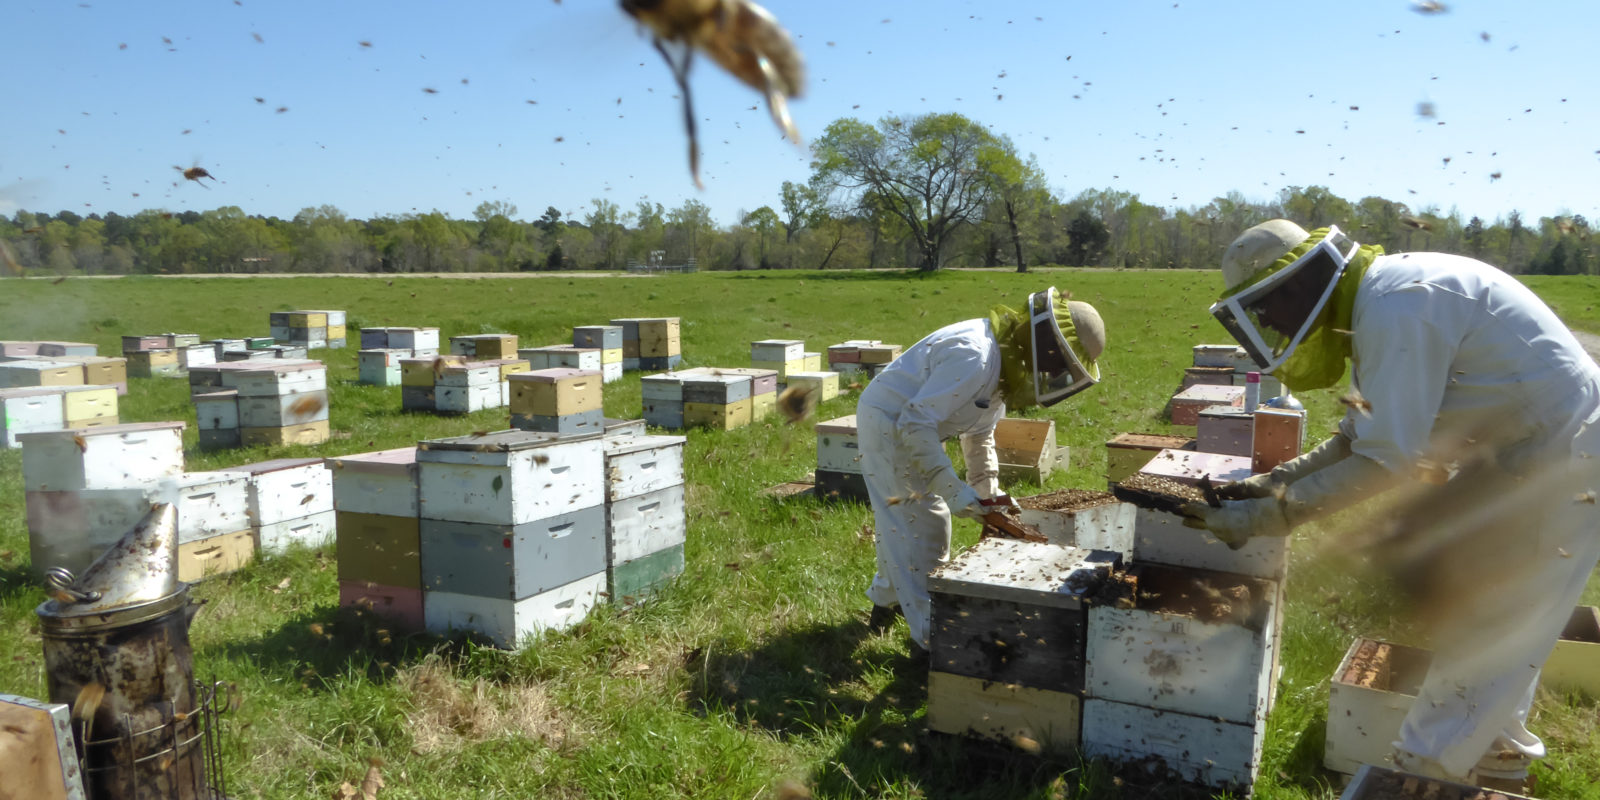 Two people beekeeping in a field